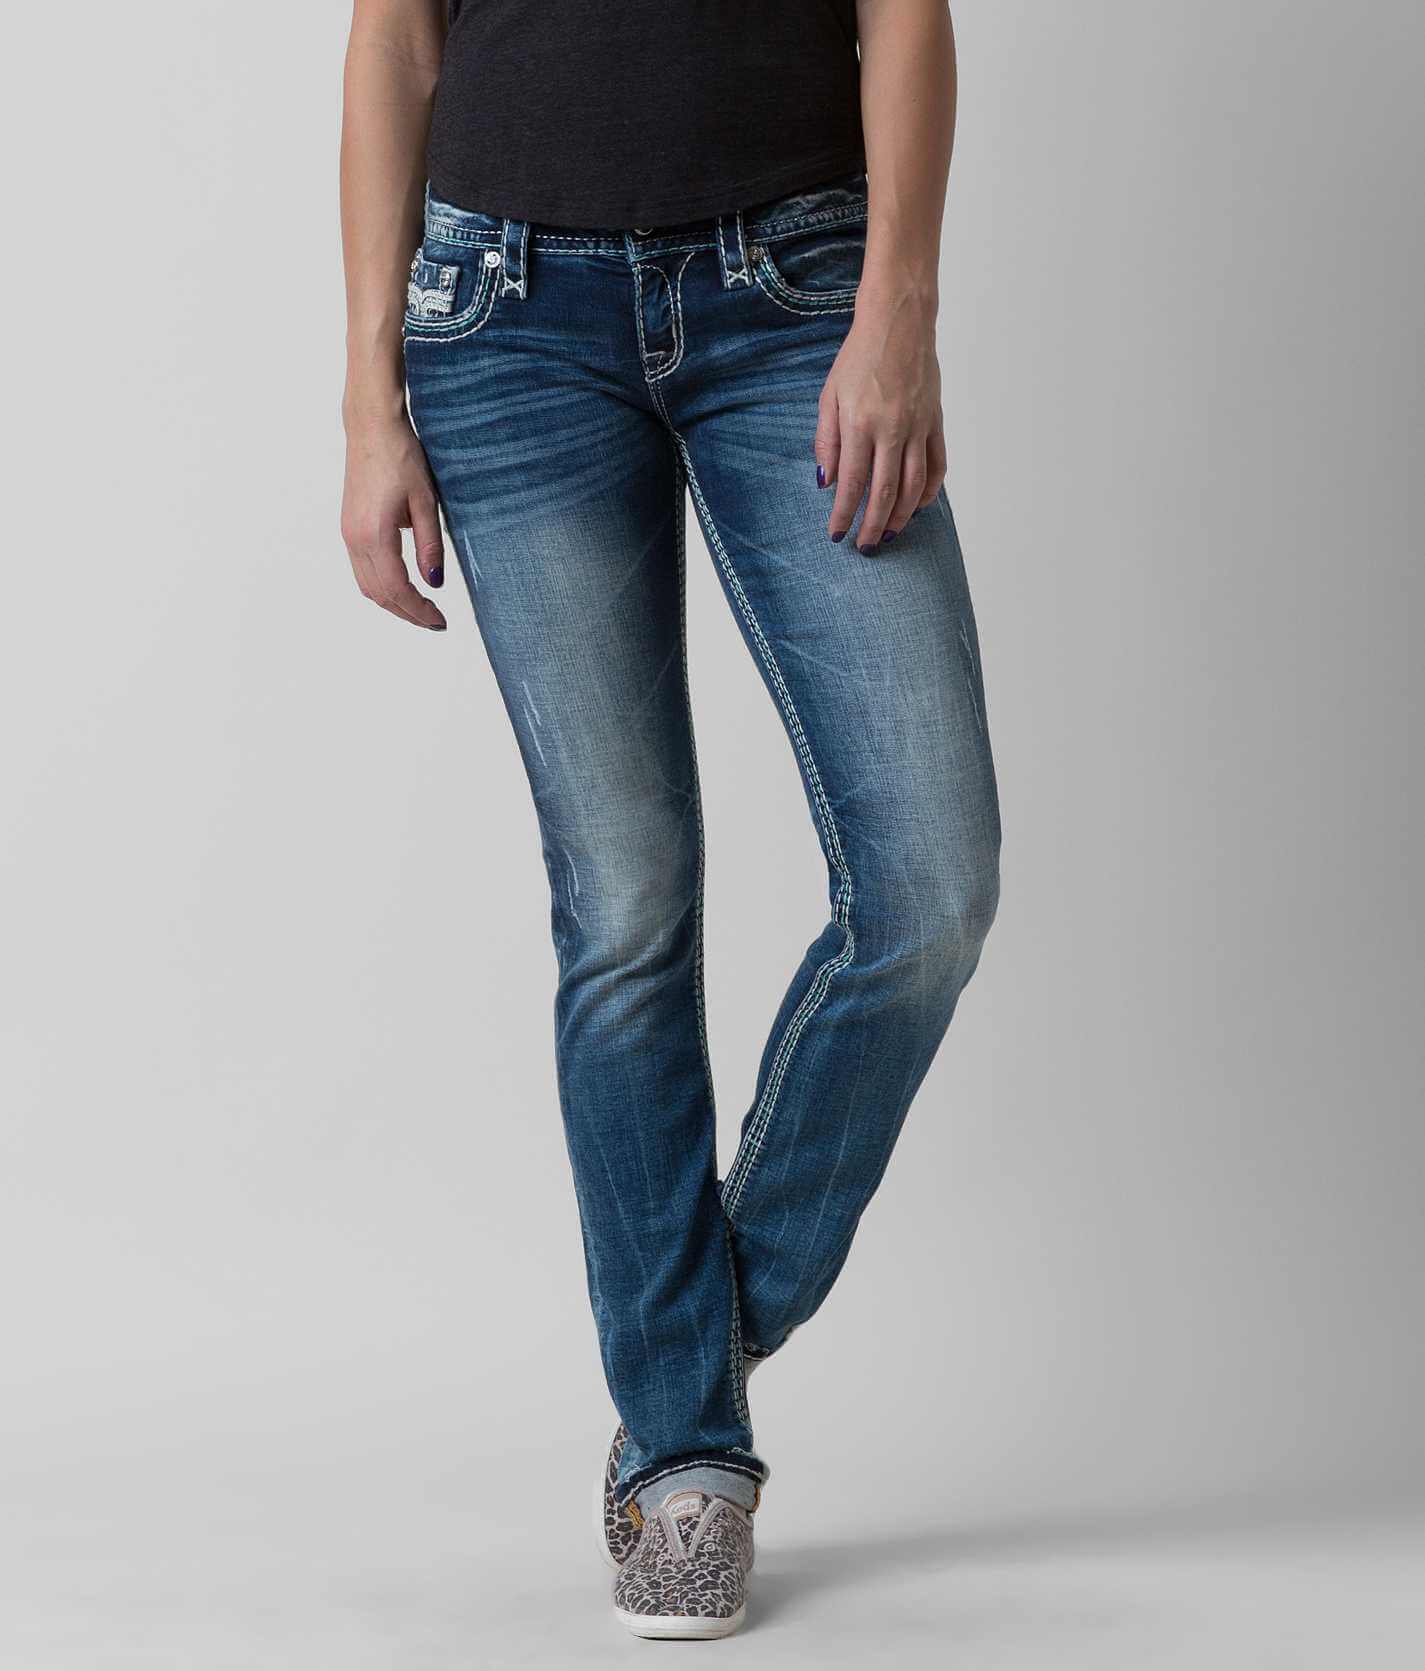 mx1 jeans